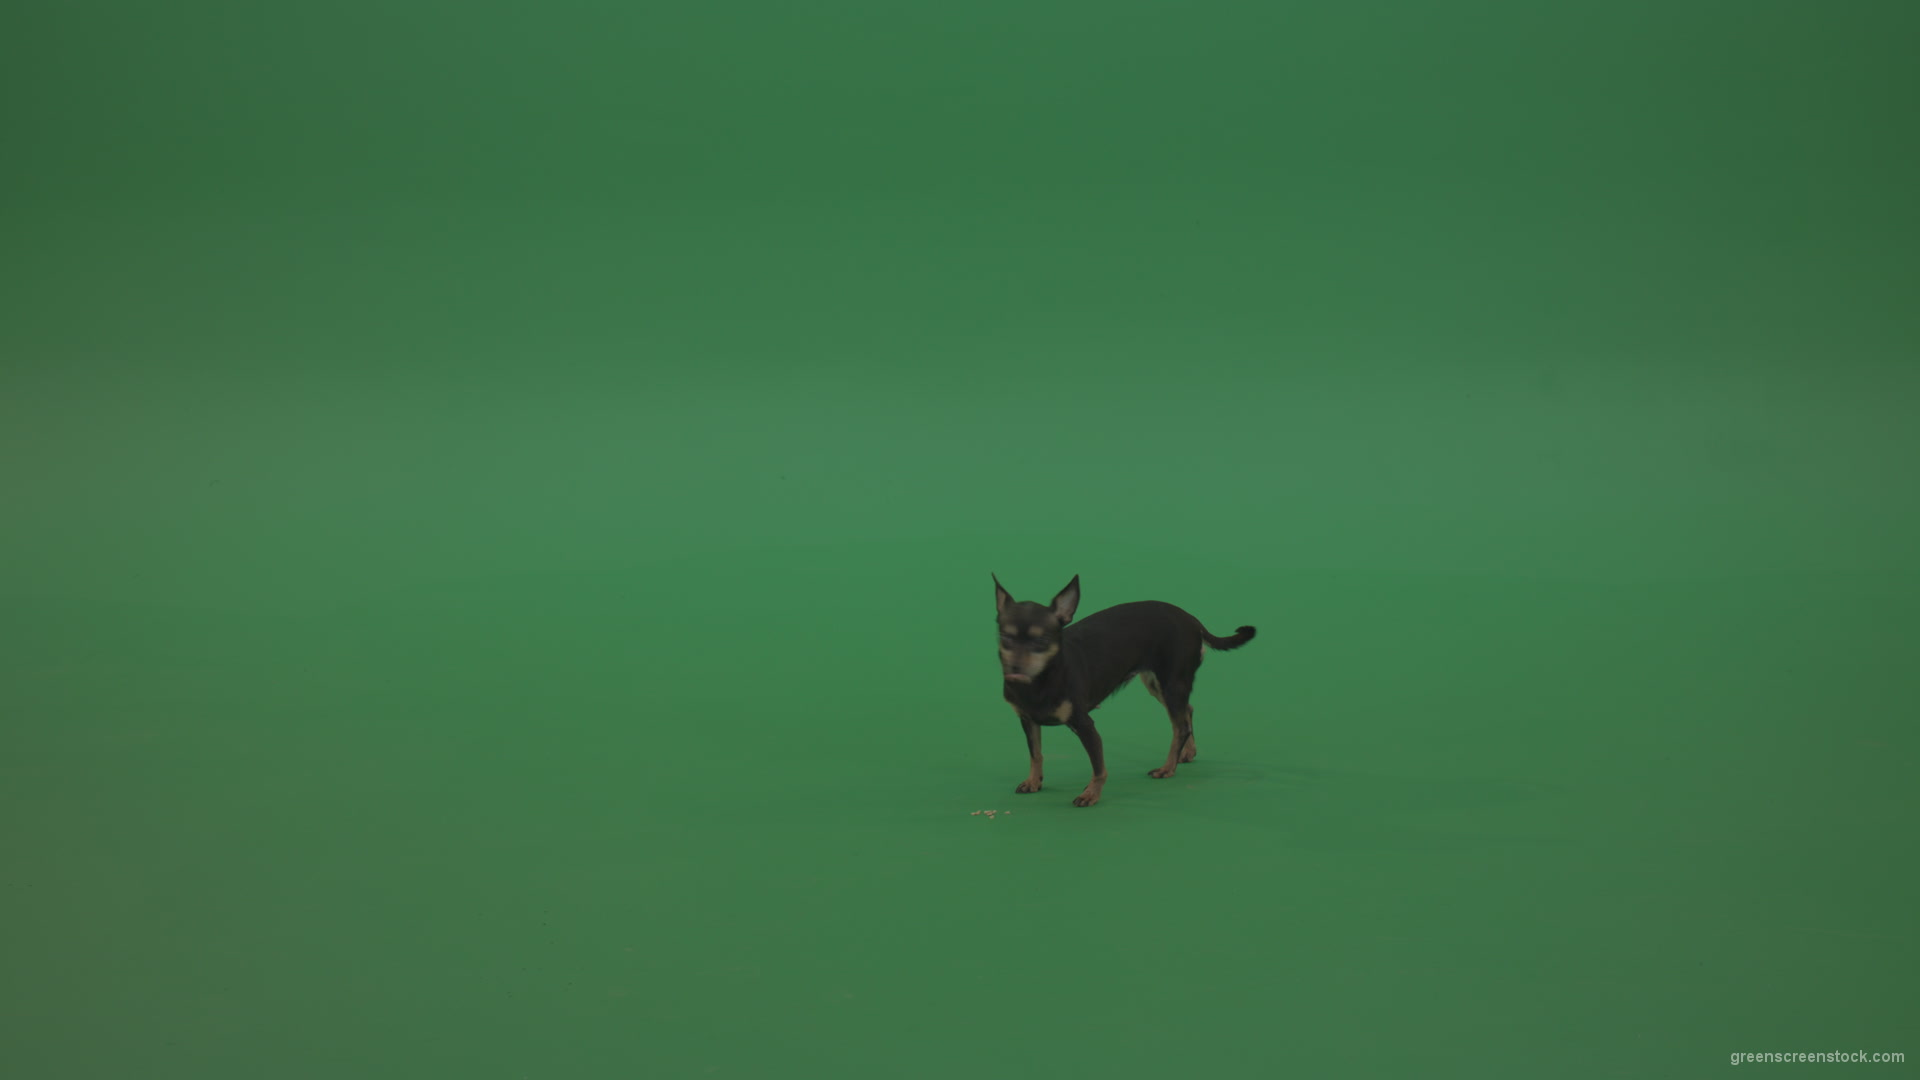 Chihuahua-small-puppy-dog-barking-in-green-screen-studio_001 Green Screen Stock